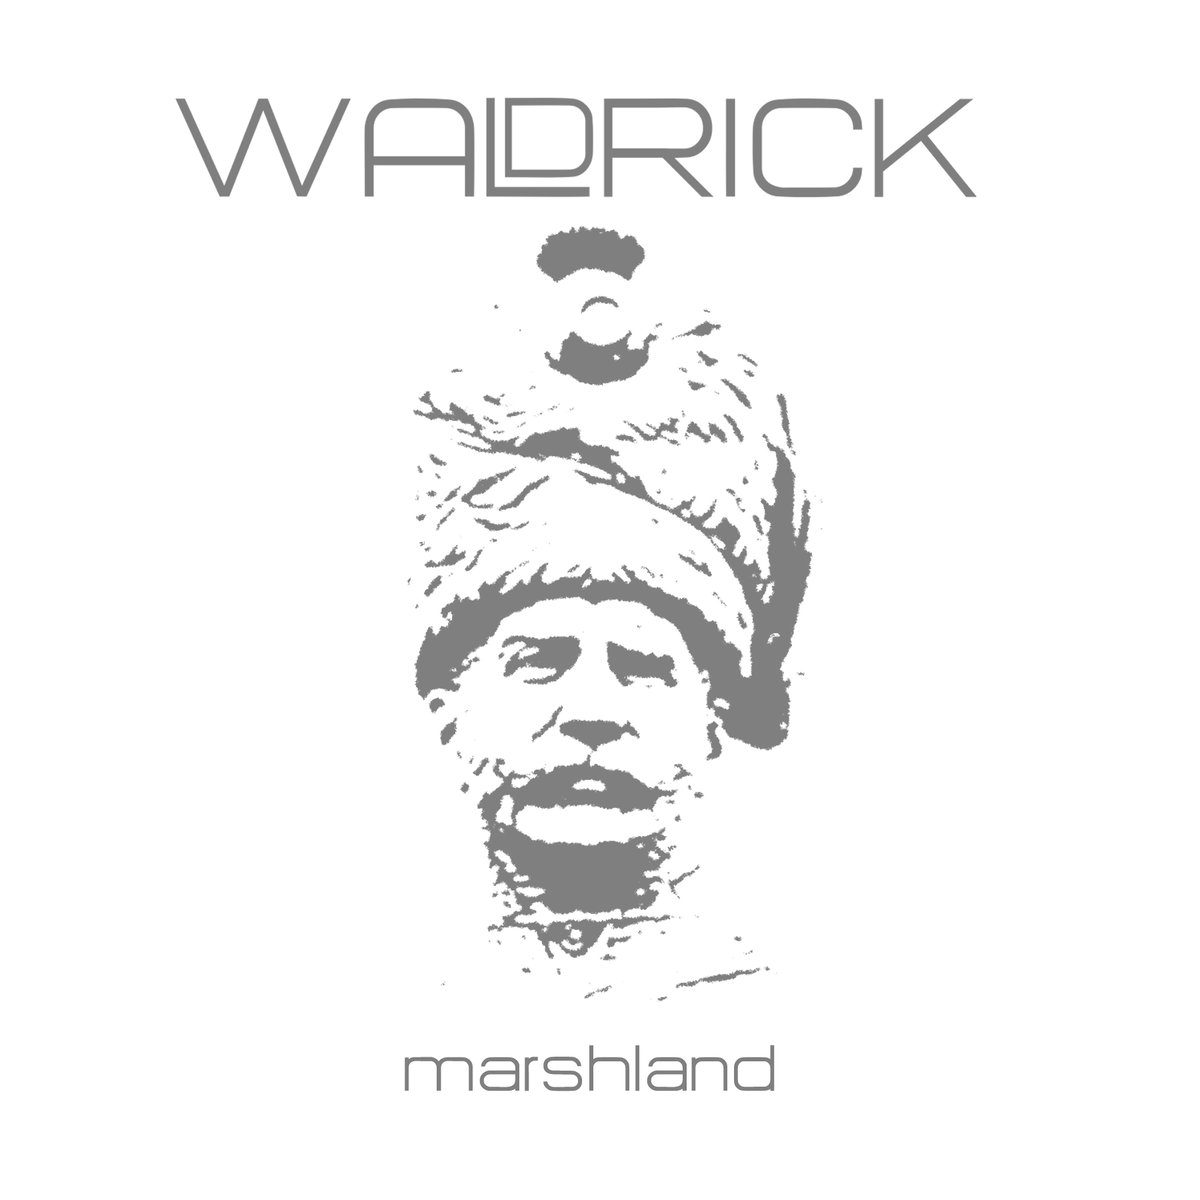 Waldrick - Marshland / CD